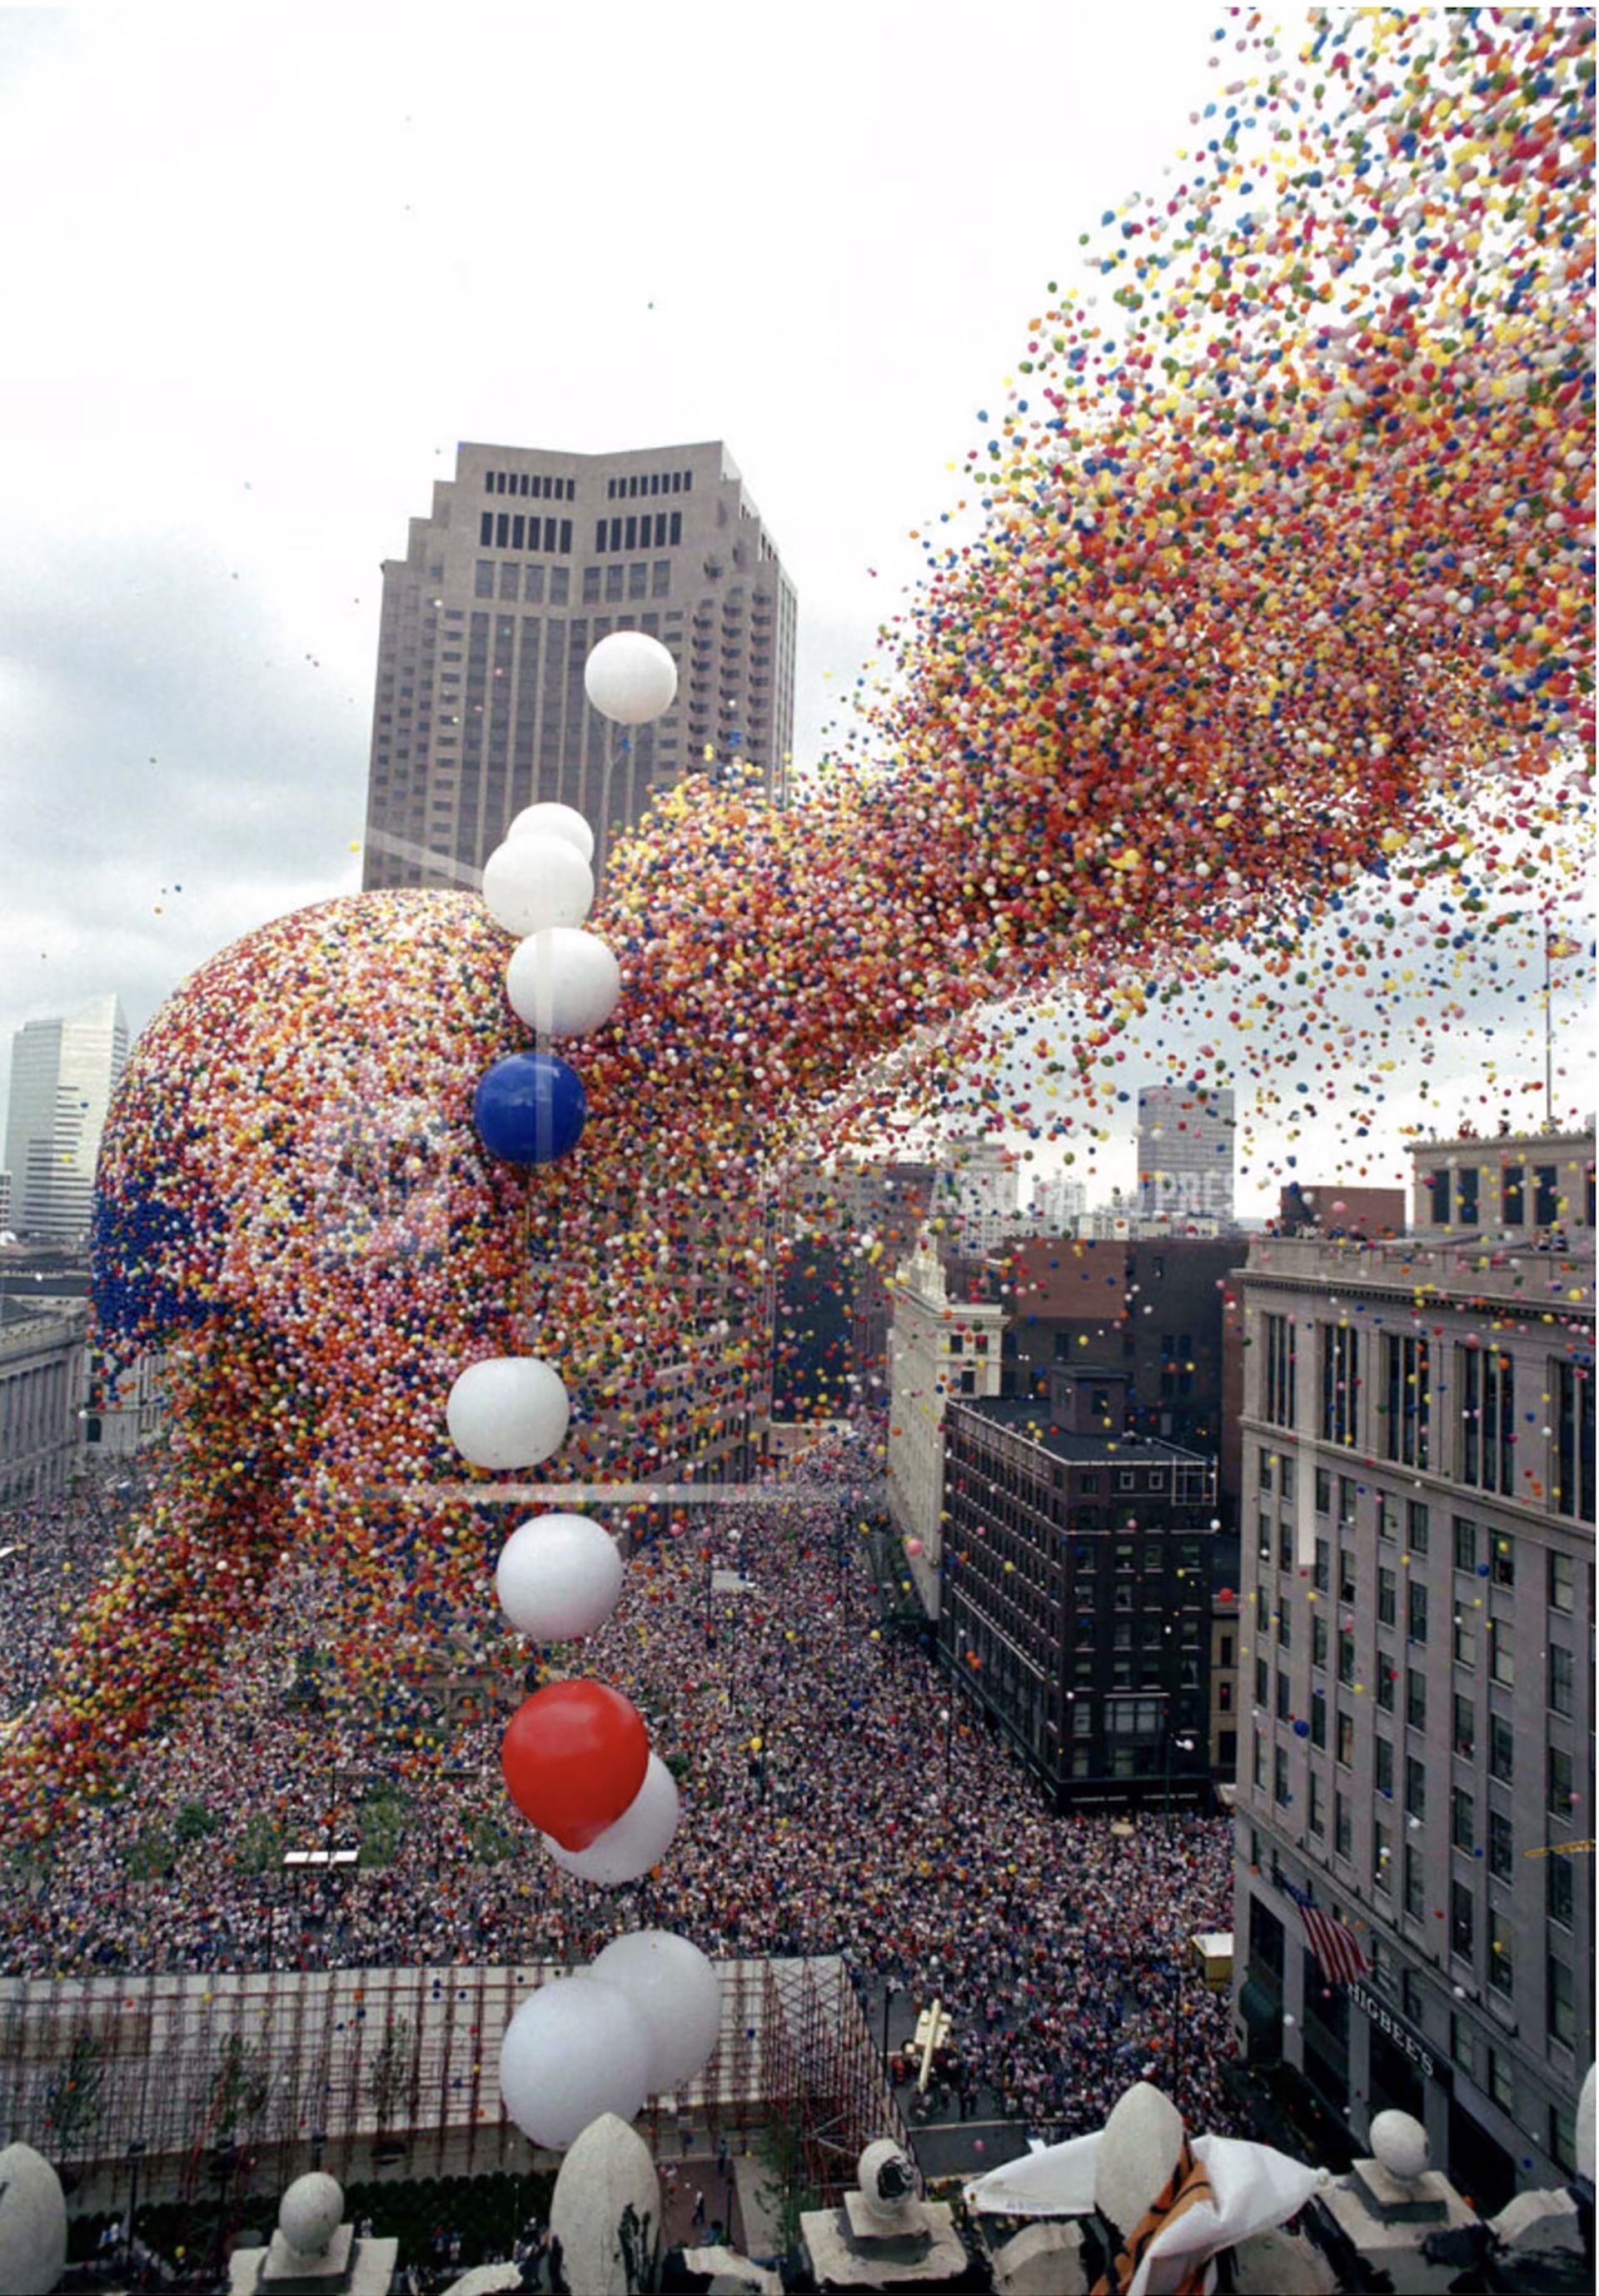 Otra imagen espectacular del Balloonfest de Cleveland en 1986. Lo que empezó como una fiesta, terminó en drama (AP Photo)